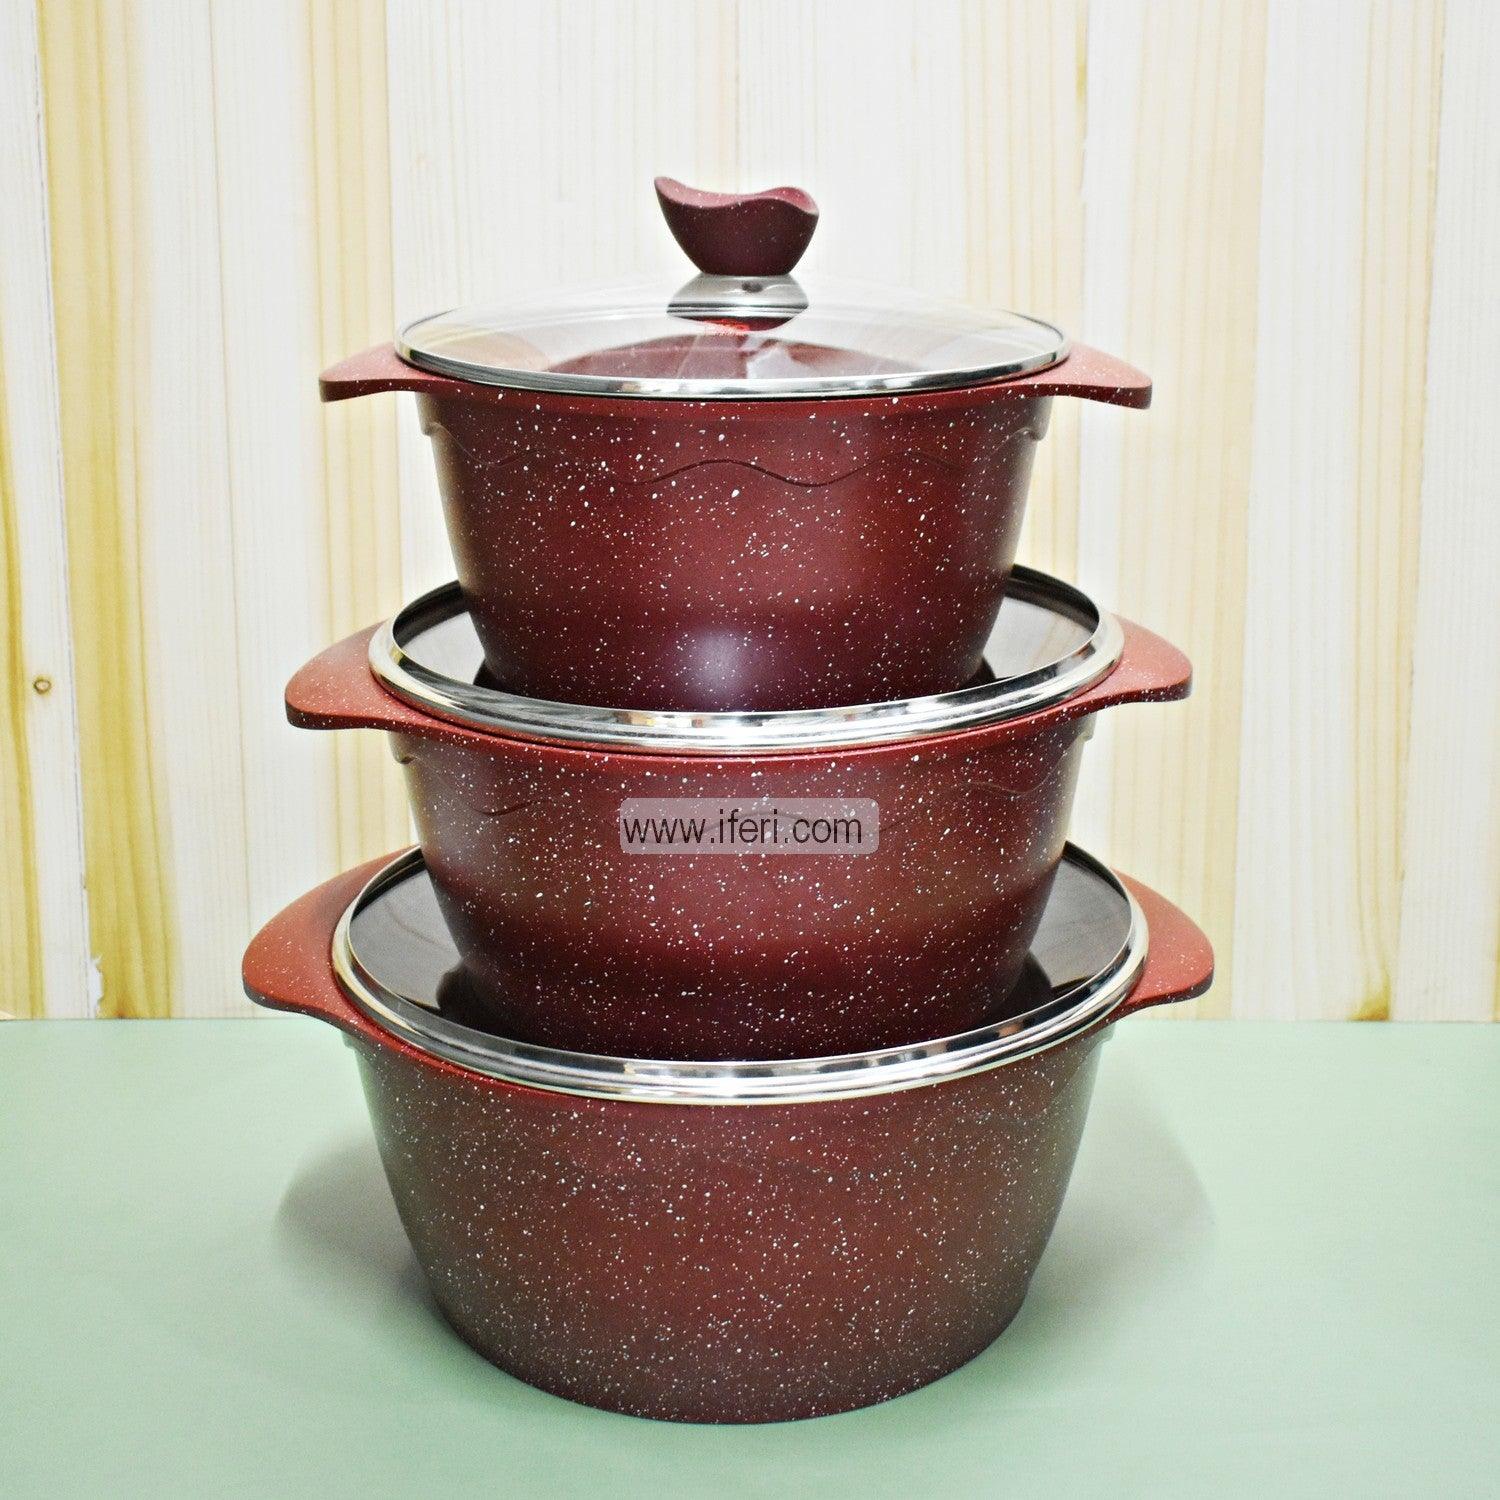 3 pcs JIO Non Stick Granite Coated Cookware Set RH1867 Price in Bangladesh - iferi.com